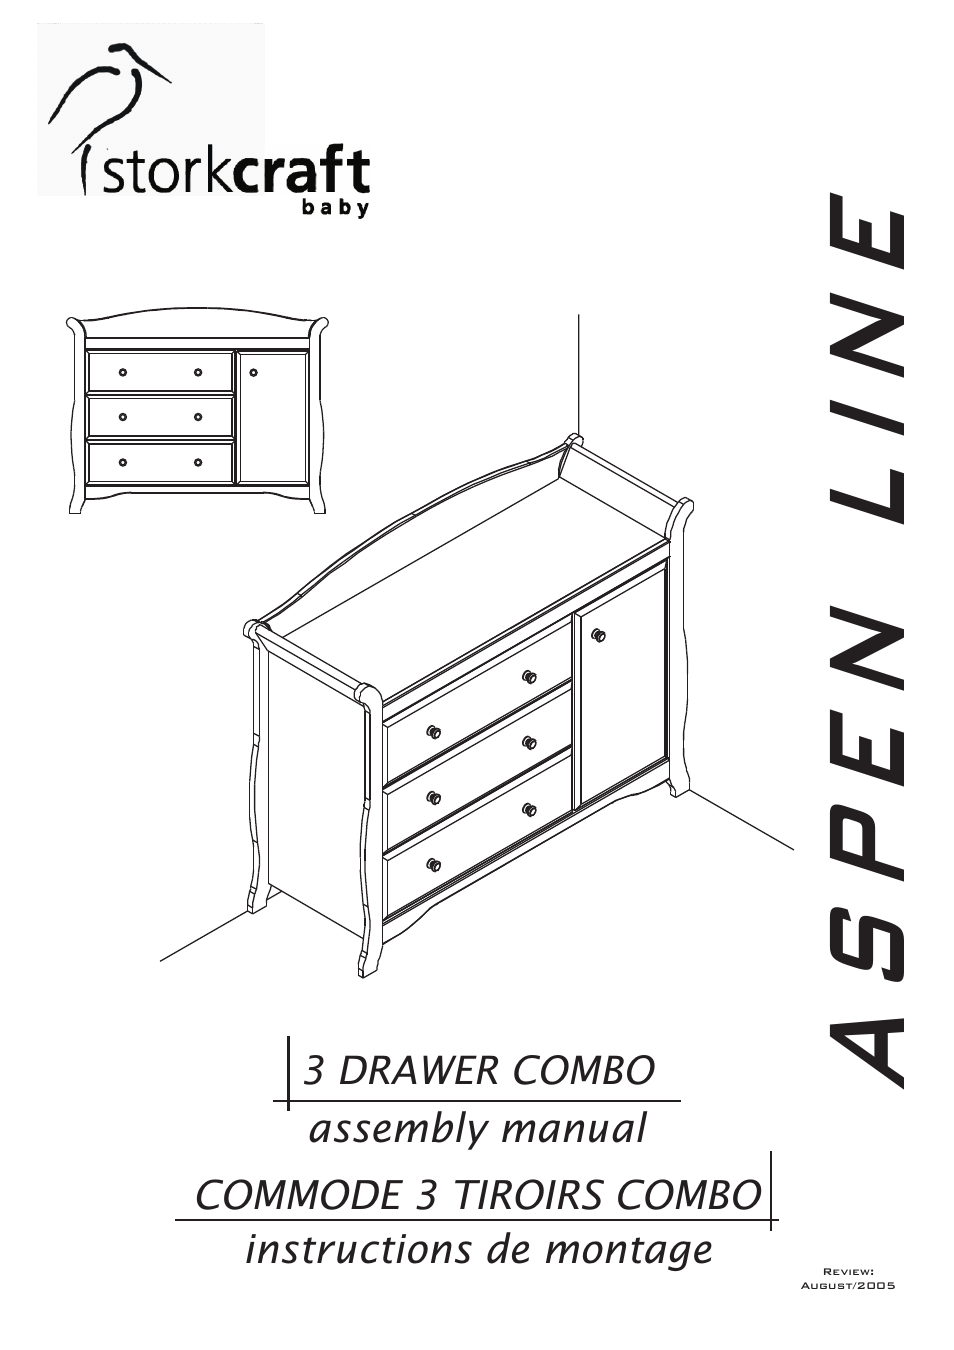 Storkcraft Aspen Combo Dresser User Manual 20 Pages